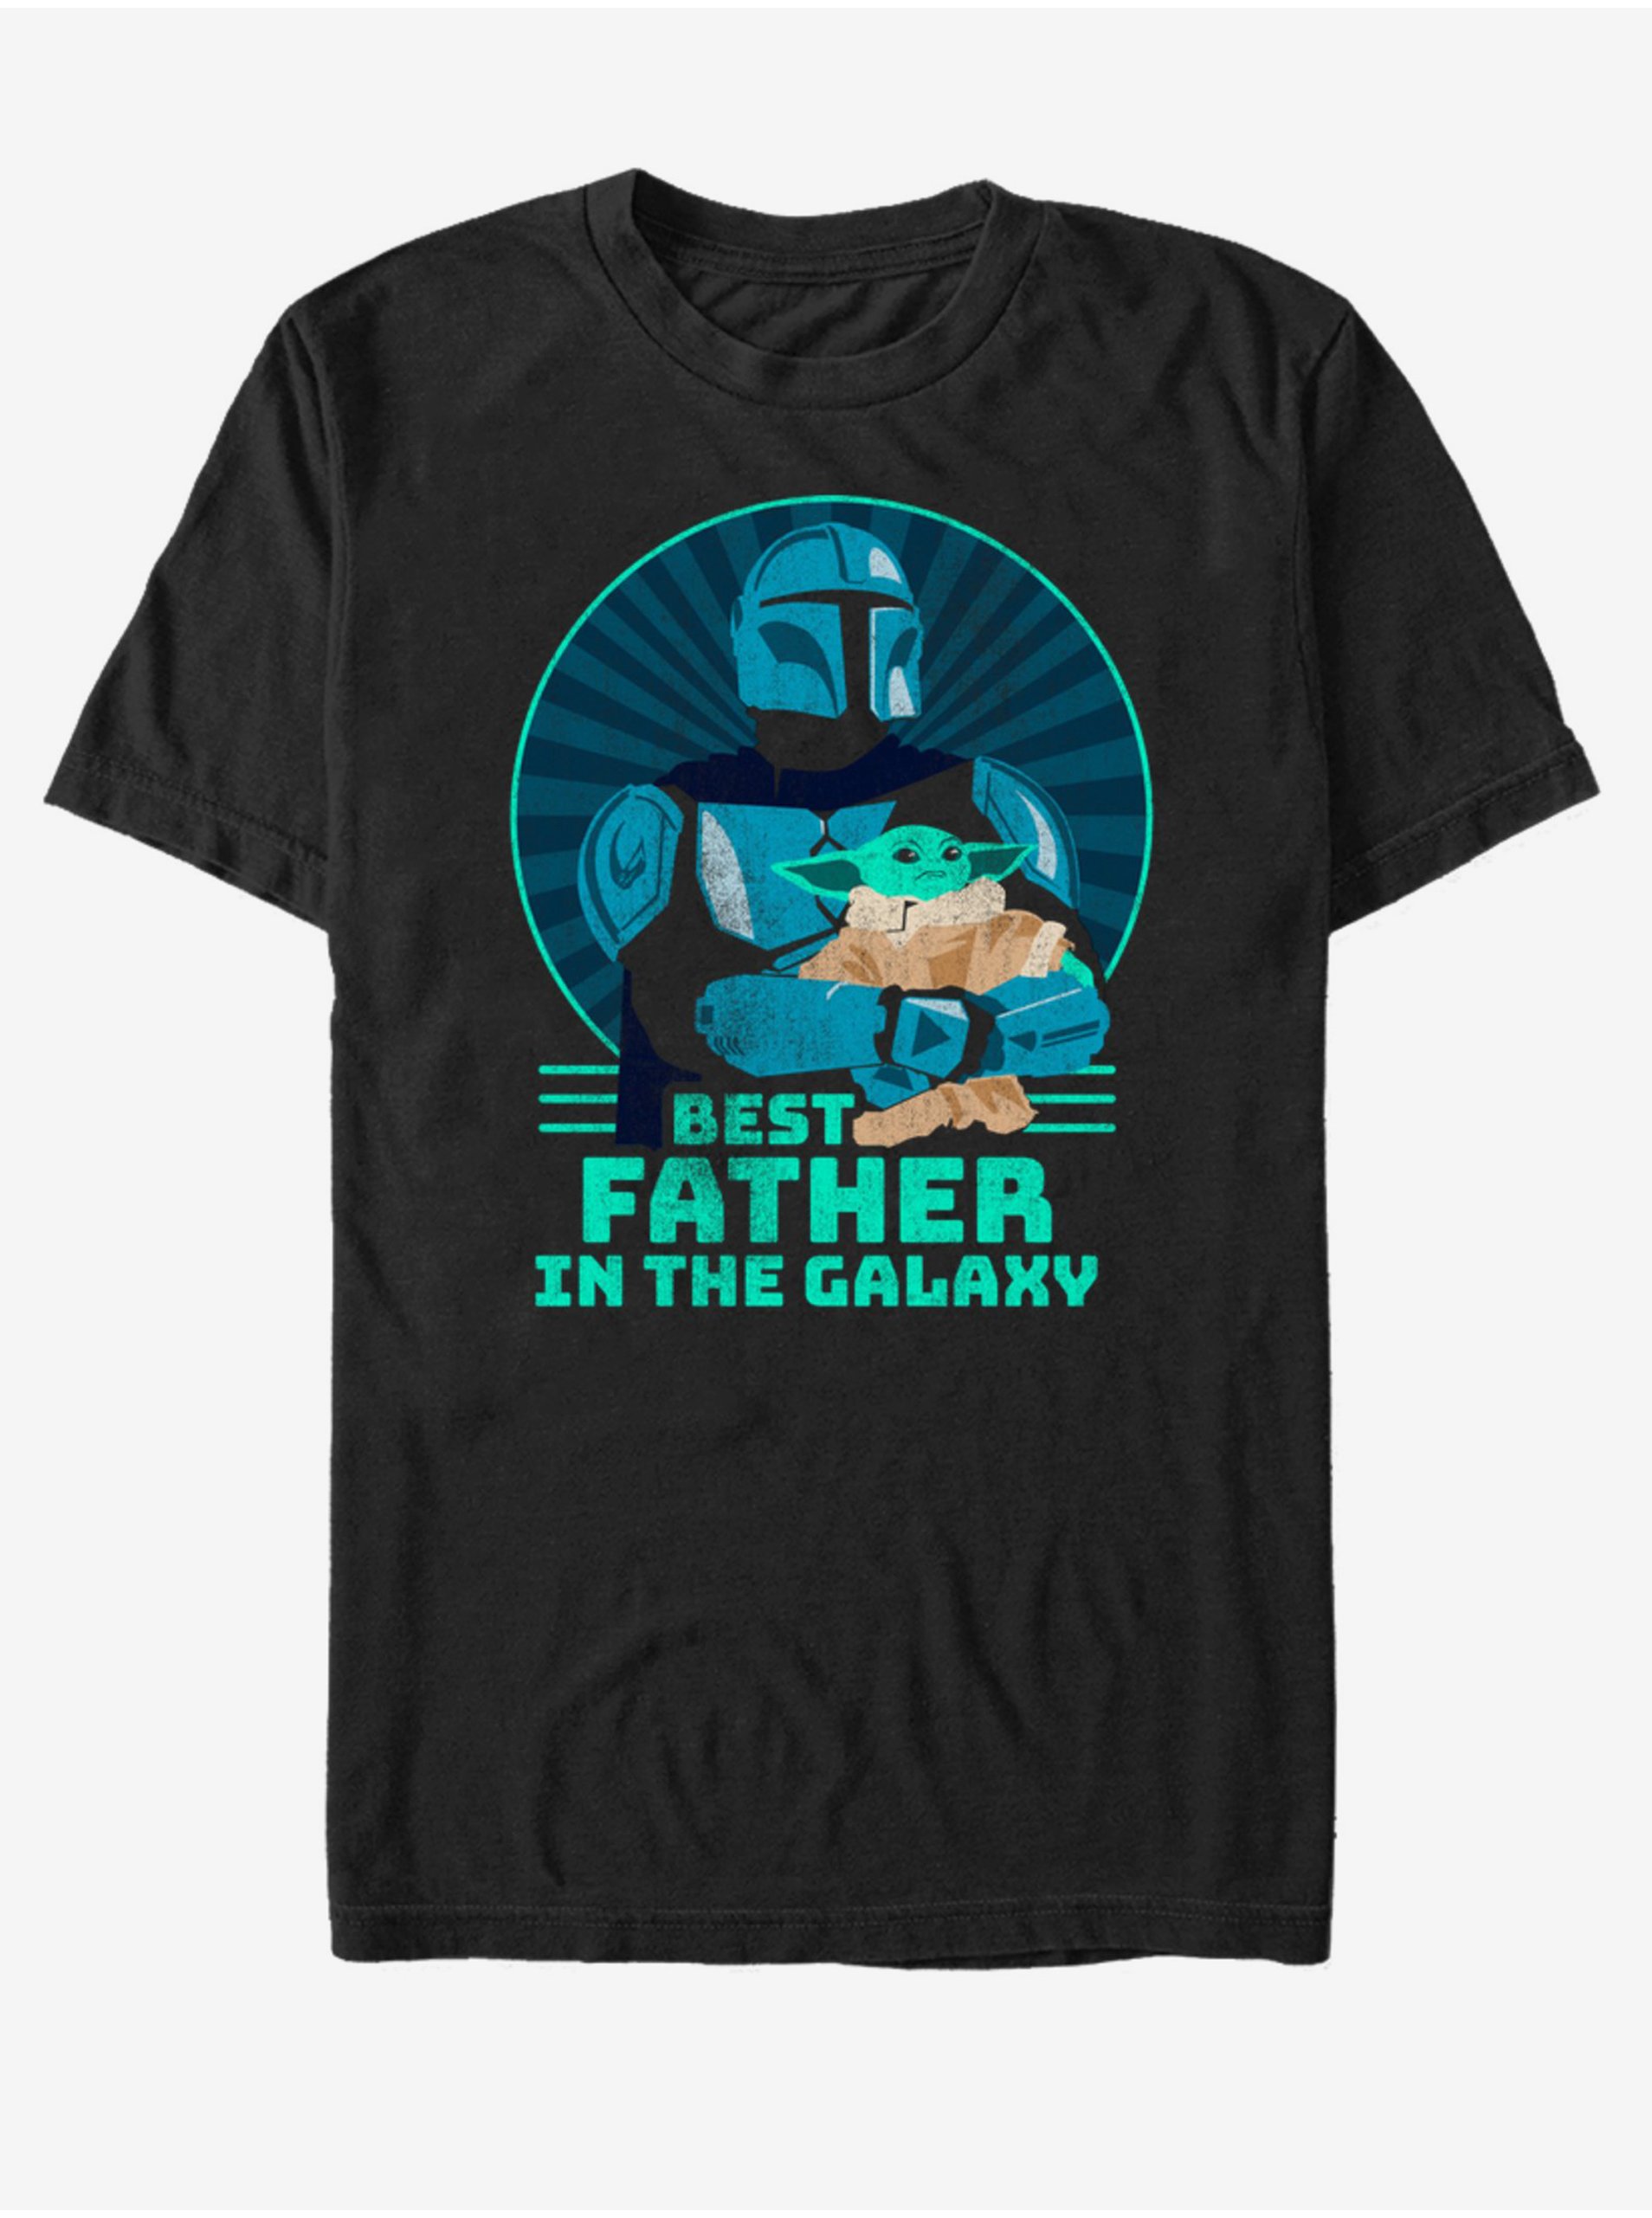 Lacno Černé unisex tričko ZOOT.Fan Star Wars Best Father